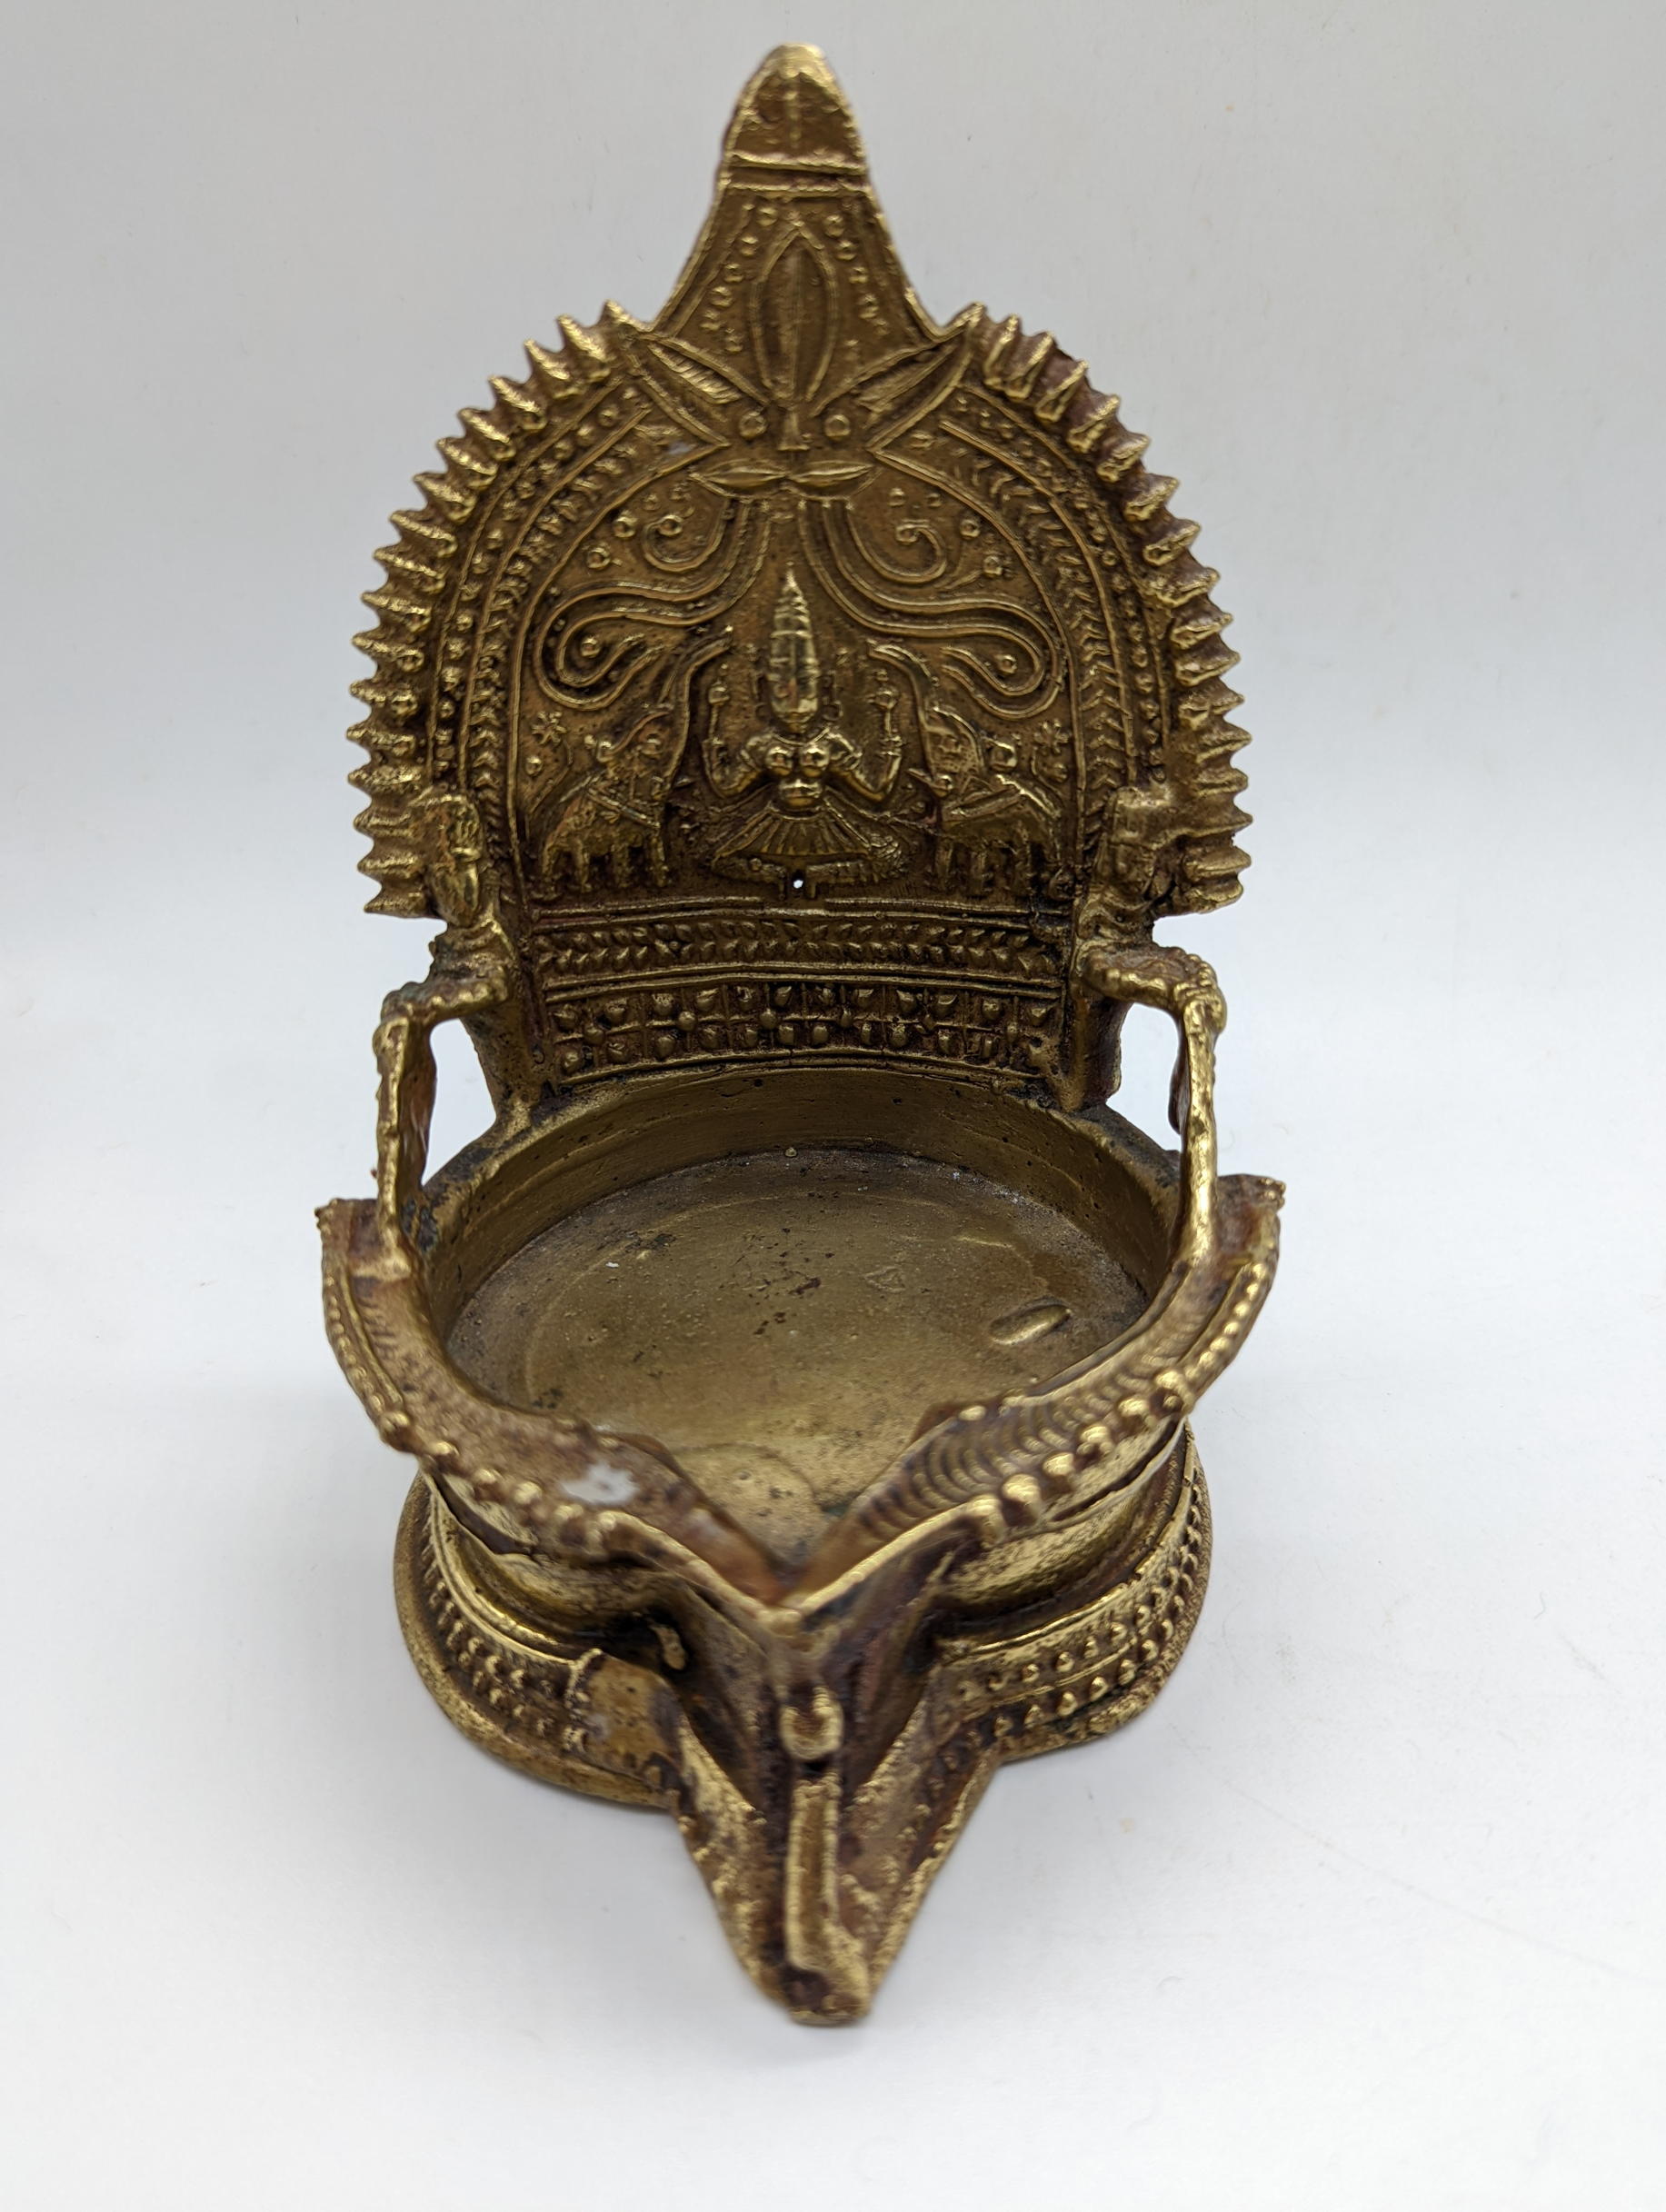 An Indian Brass Gajalakshmi Oil Lamp, with Hindu images of Goddess and Elephants, H.14cm - Image 2 of 2